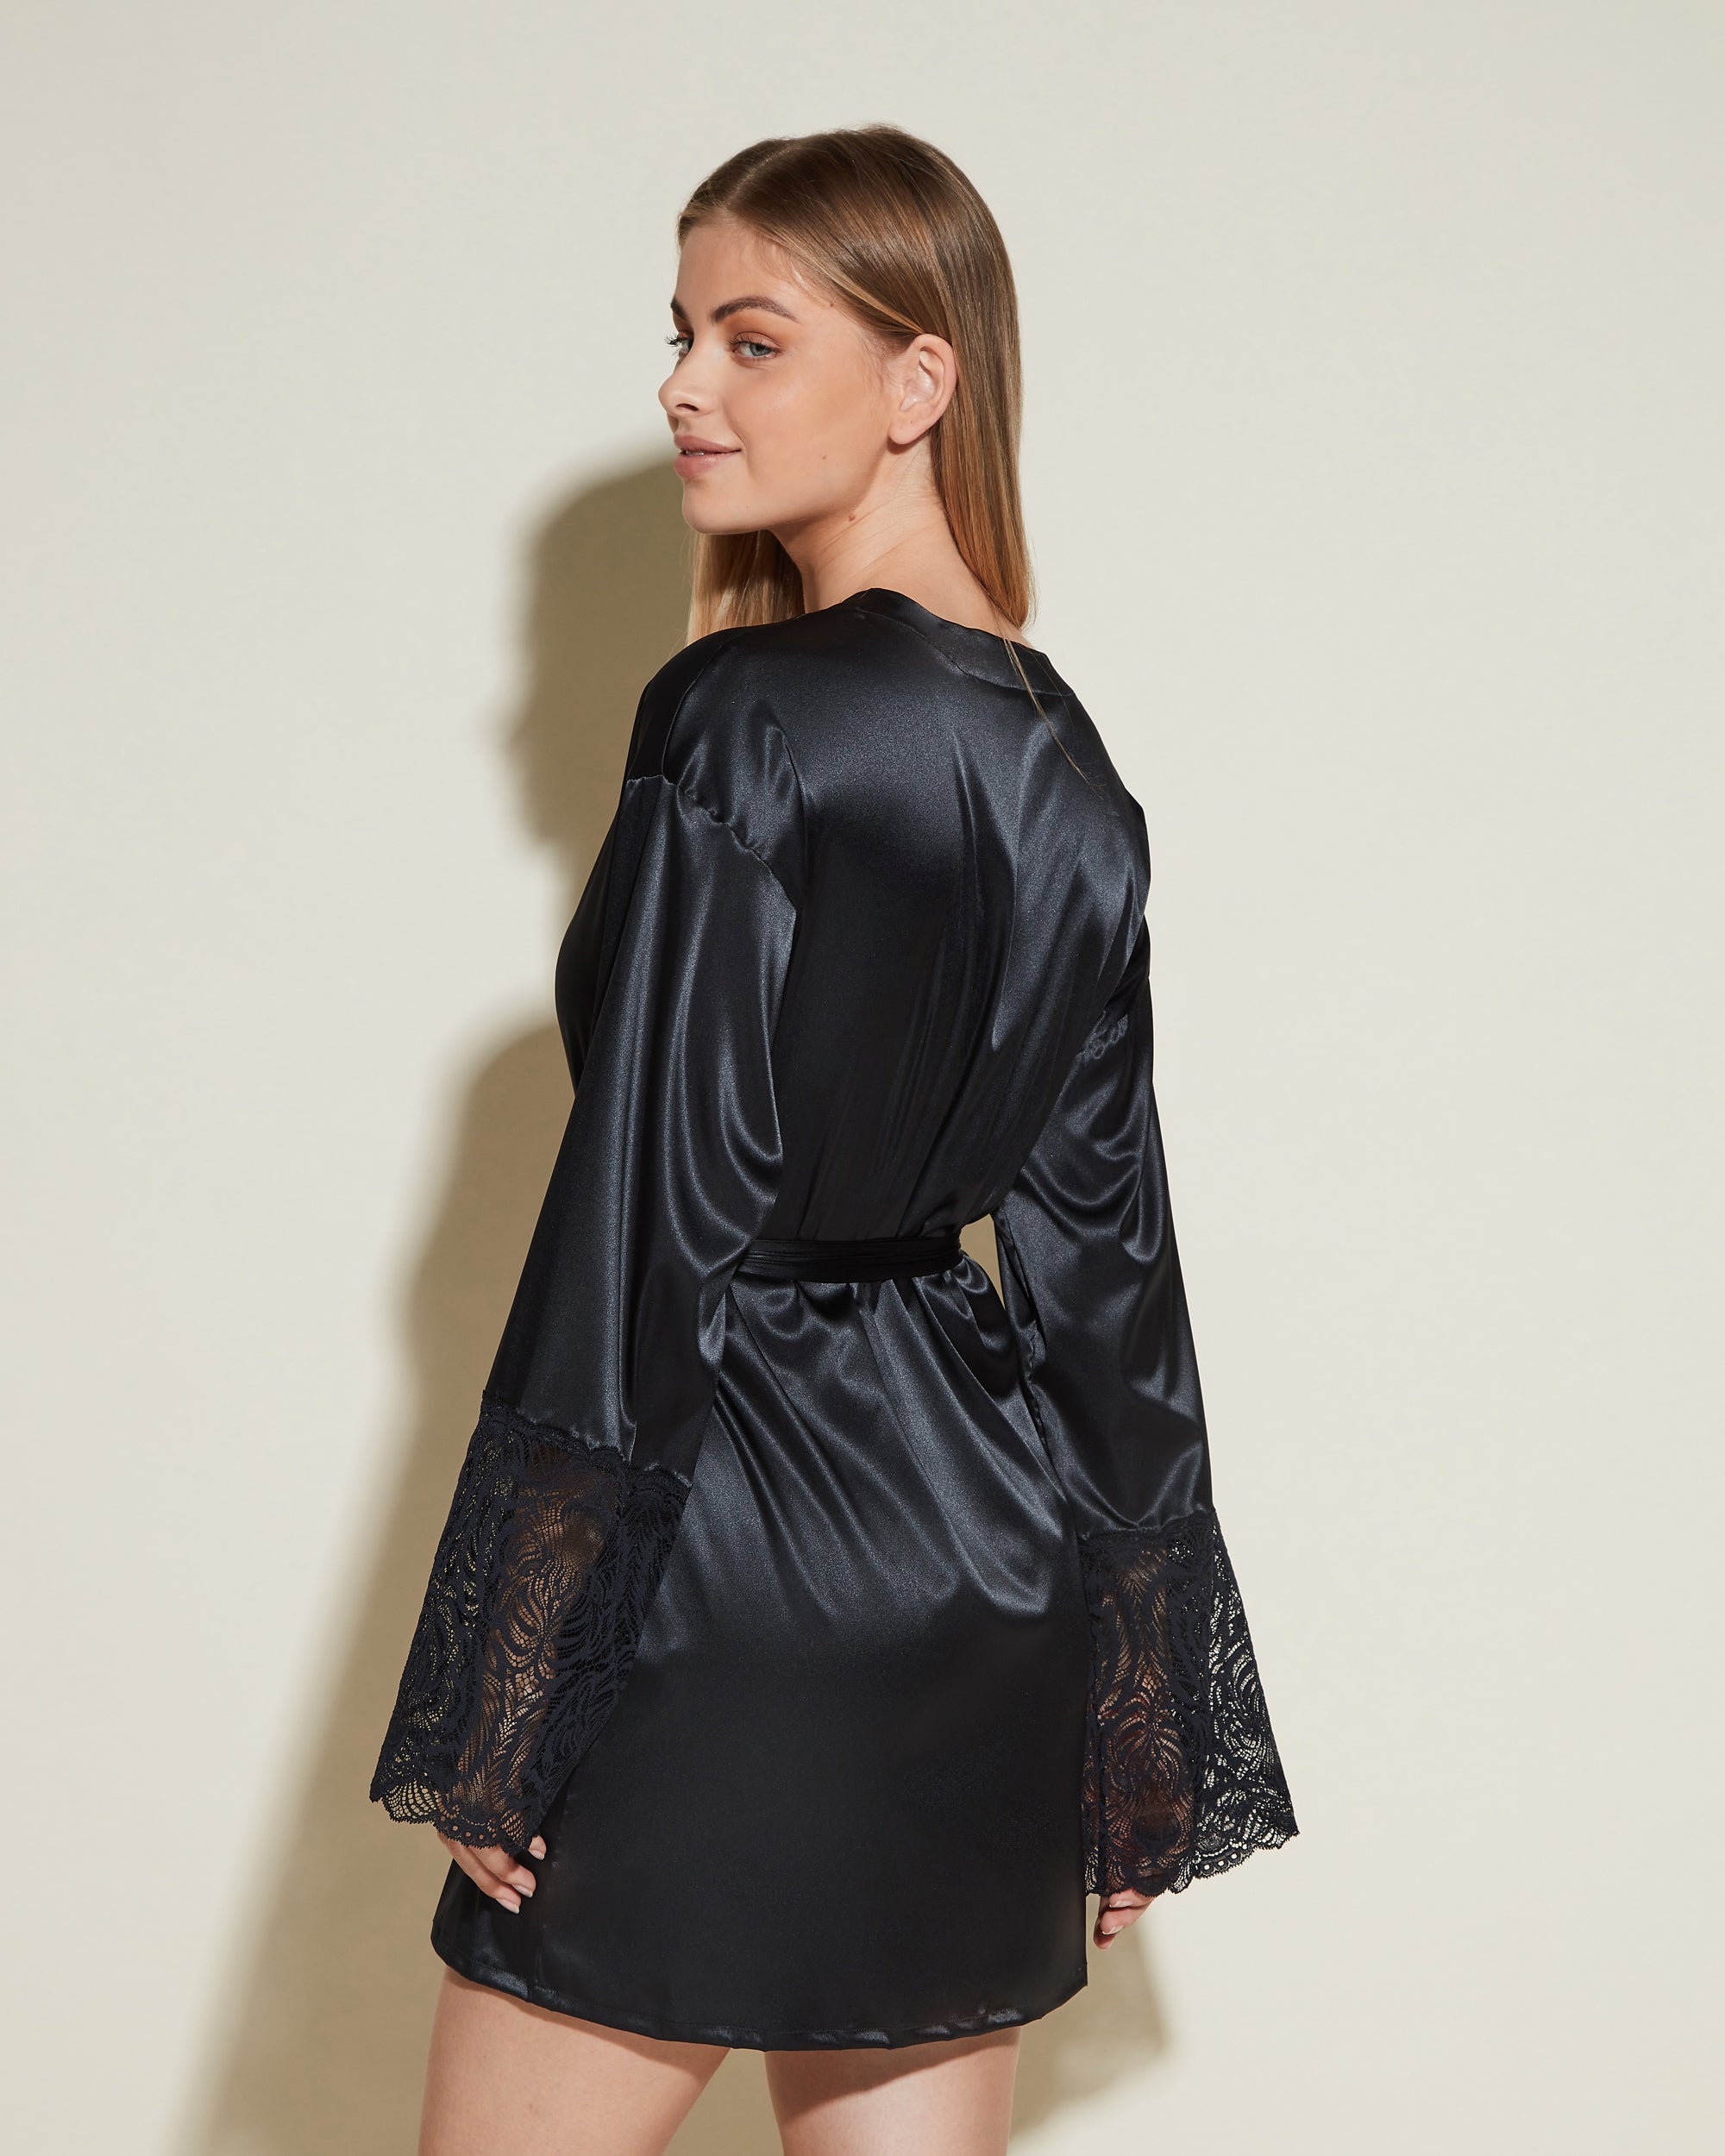 Cosabella Sicilia Short Robe in Black FINAL SALE (30% Off) - Busted Bra Shop